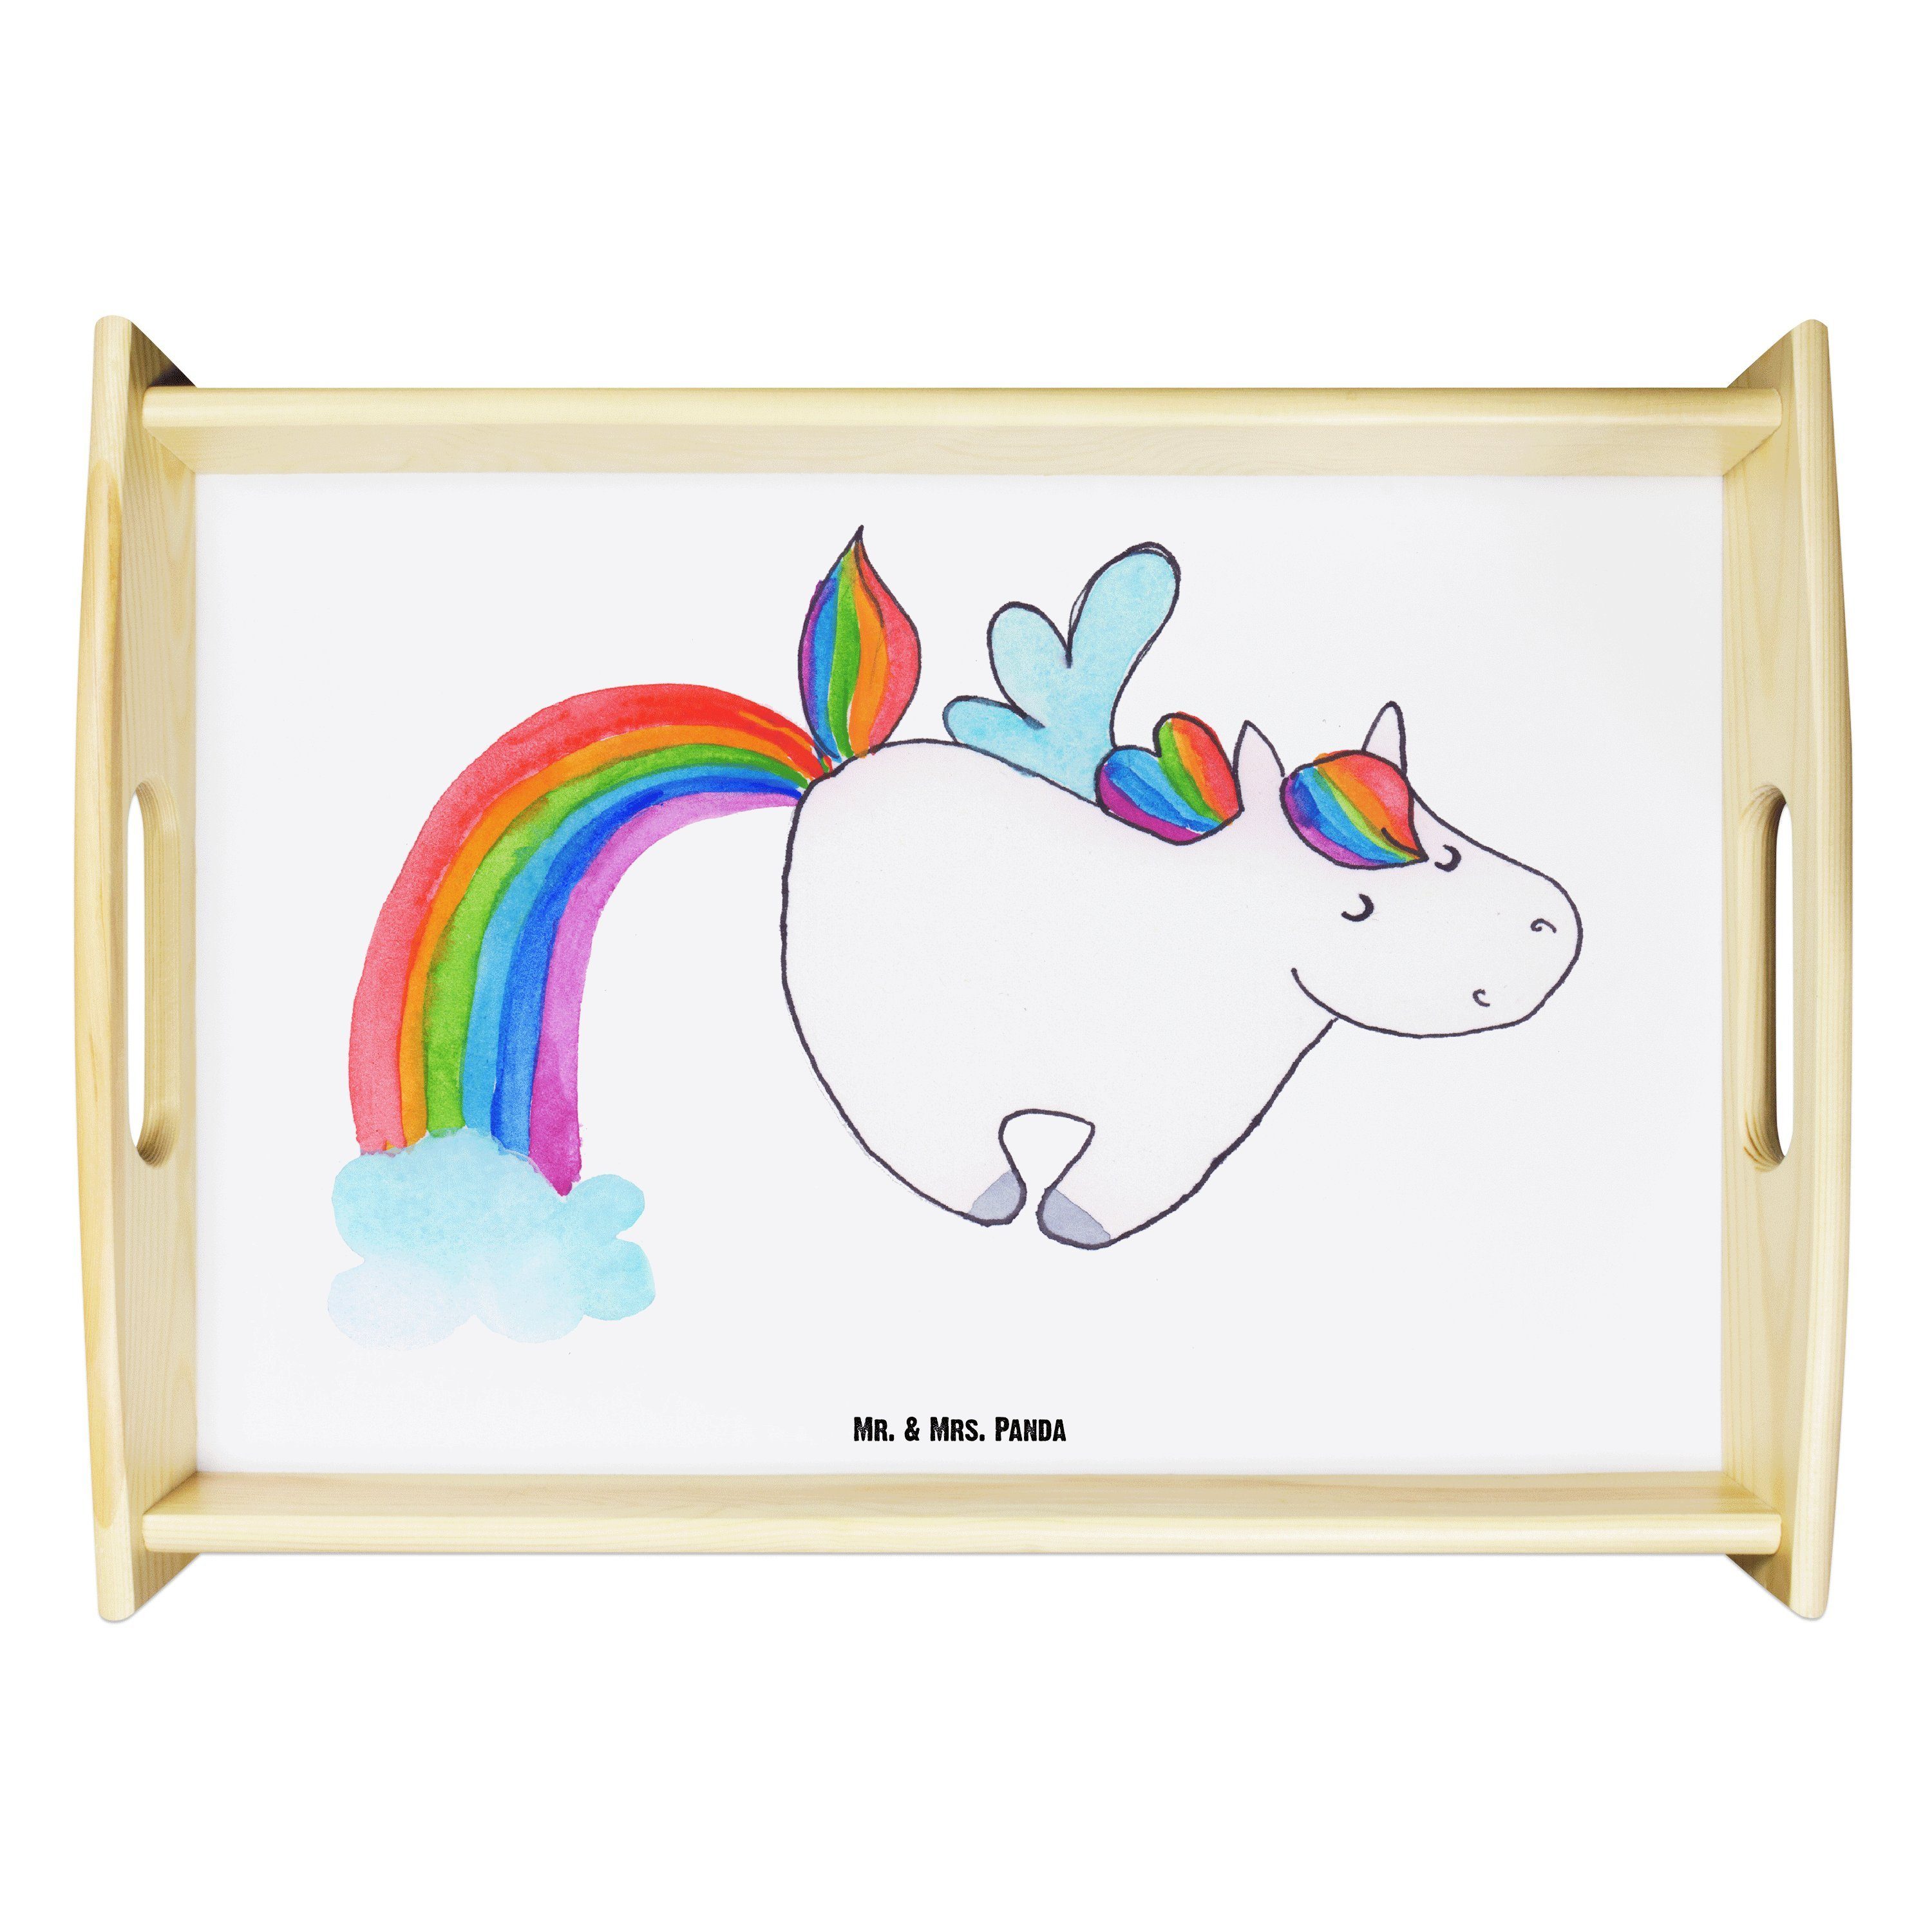 Mr. & Mrs. Panda Tablett Einhorn Pegasus - Weiß - Geschenk, Holztablett, Unicorn, Regenbogen, Echtholz lasiert, (1-tlg)